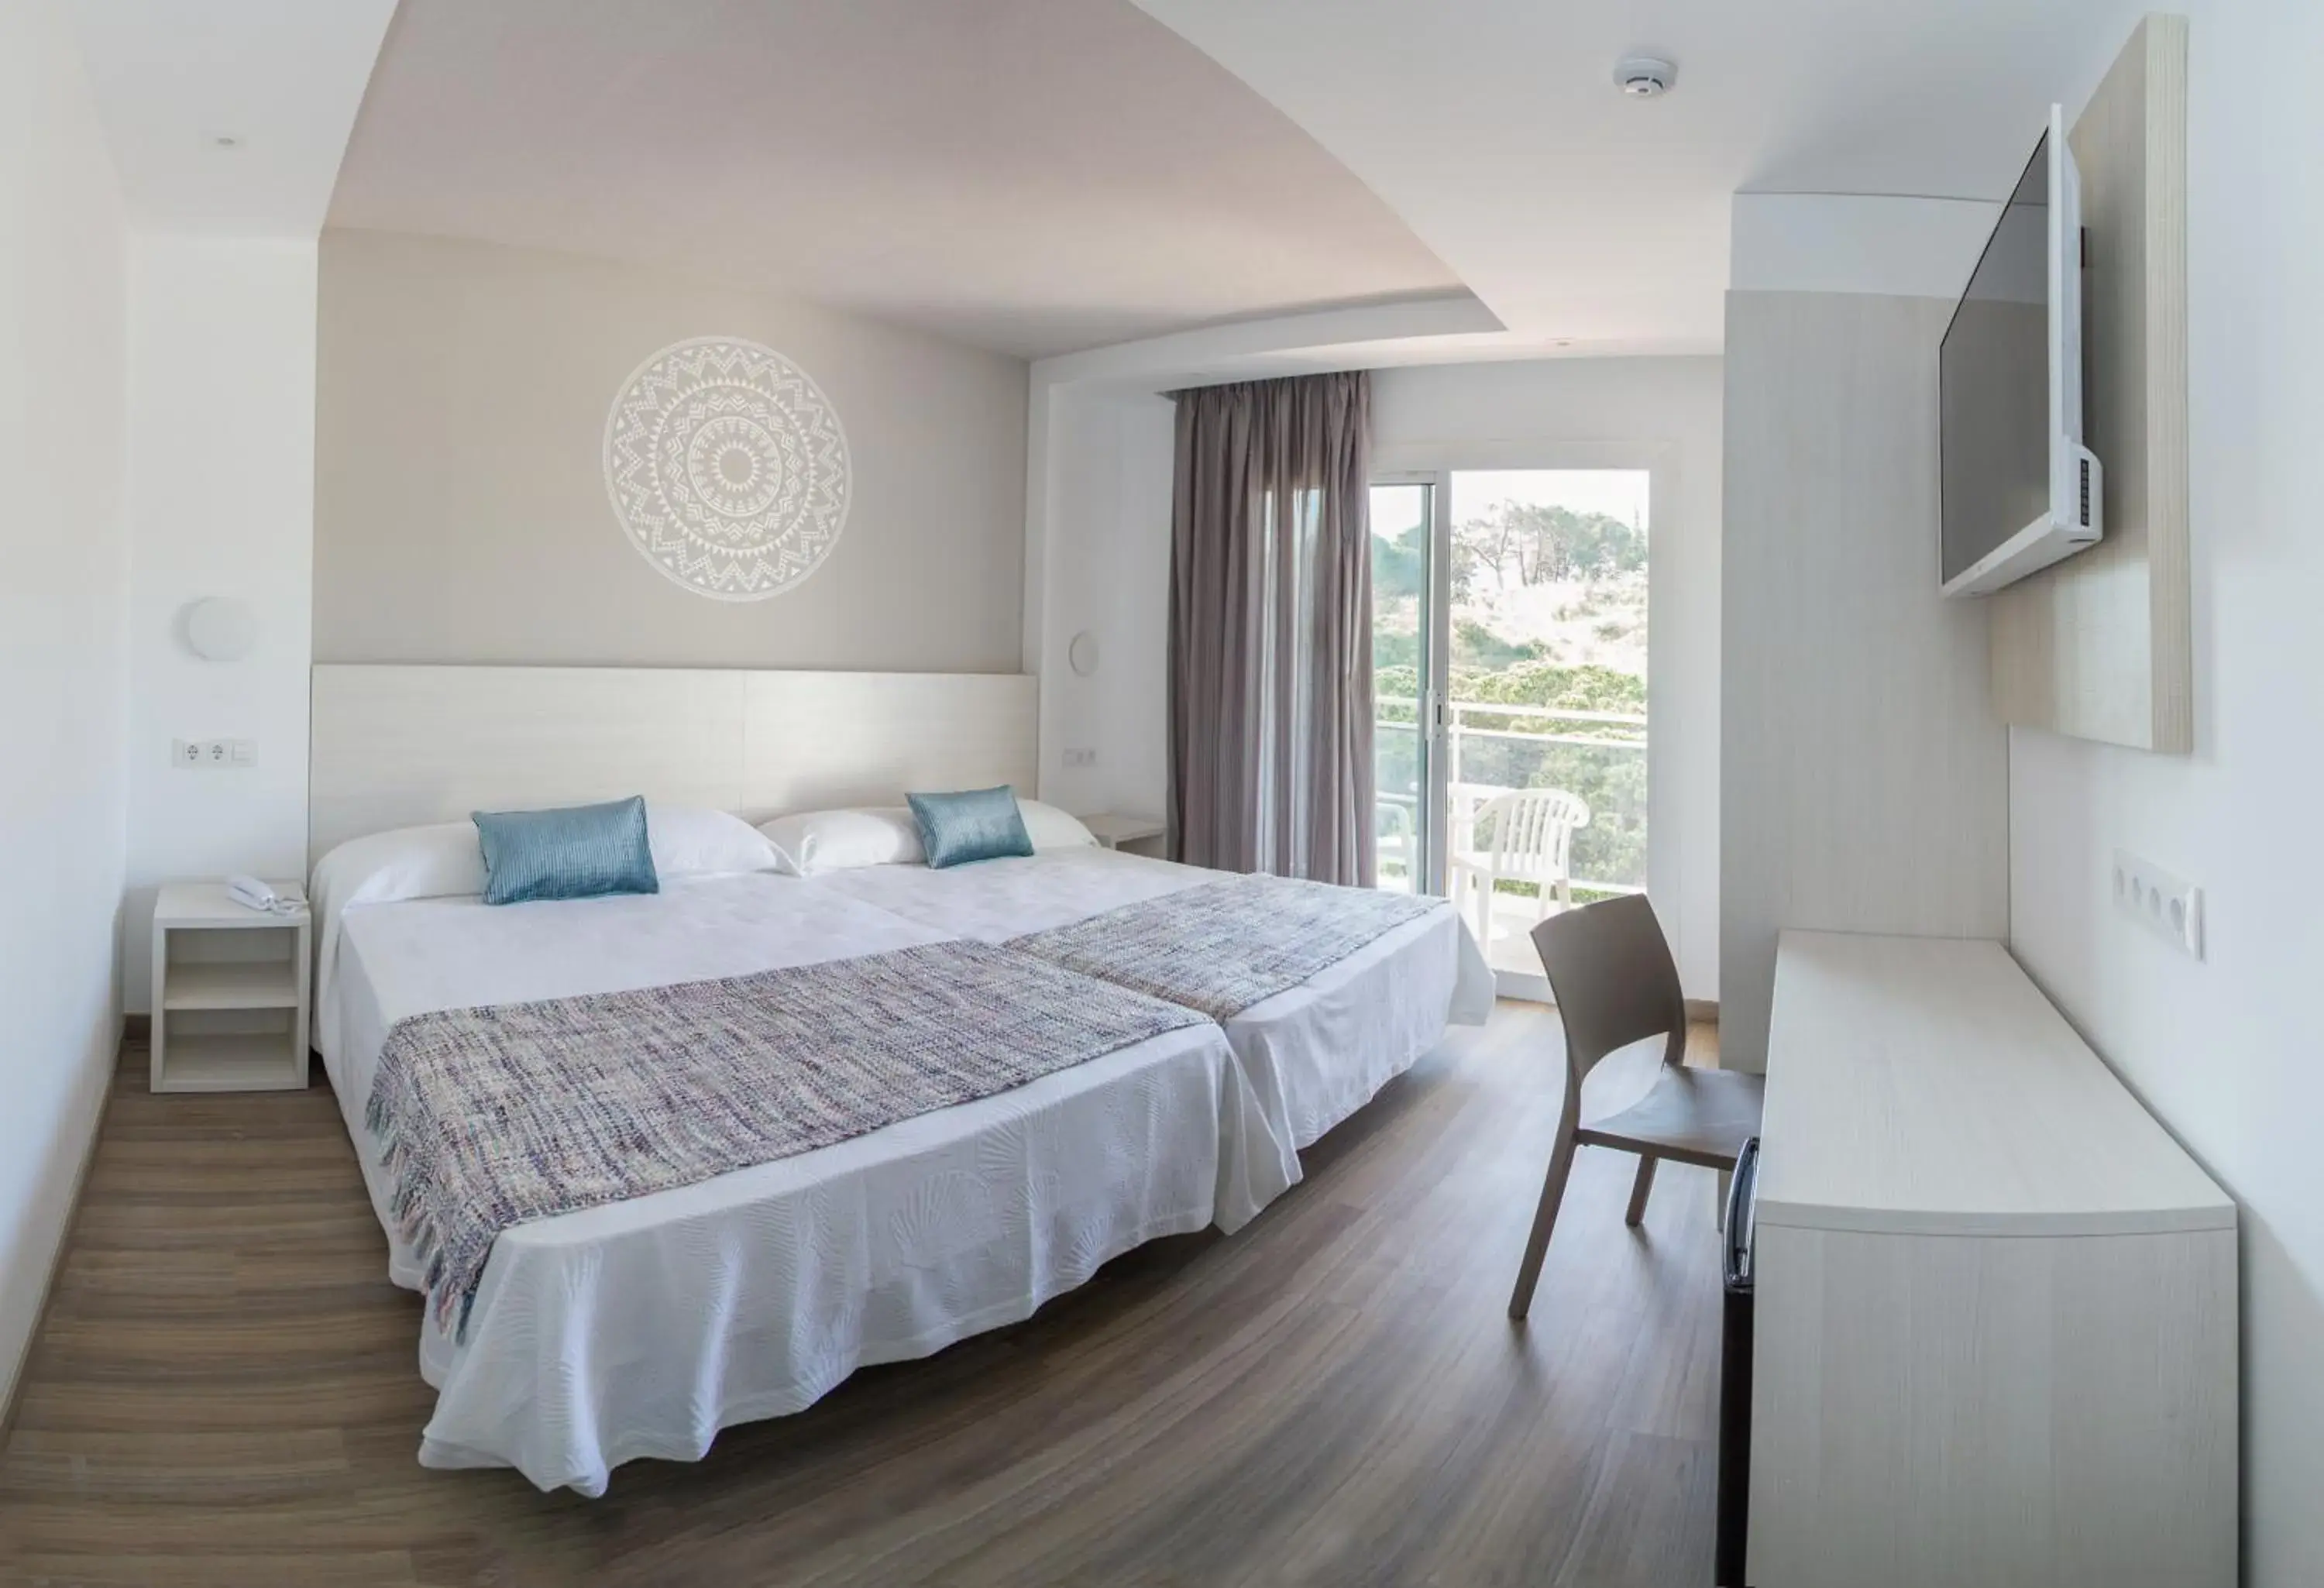 Bed, Room Photo in Hotel Oasis Park Splash